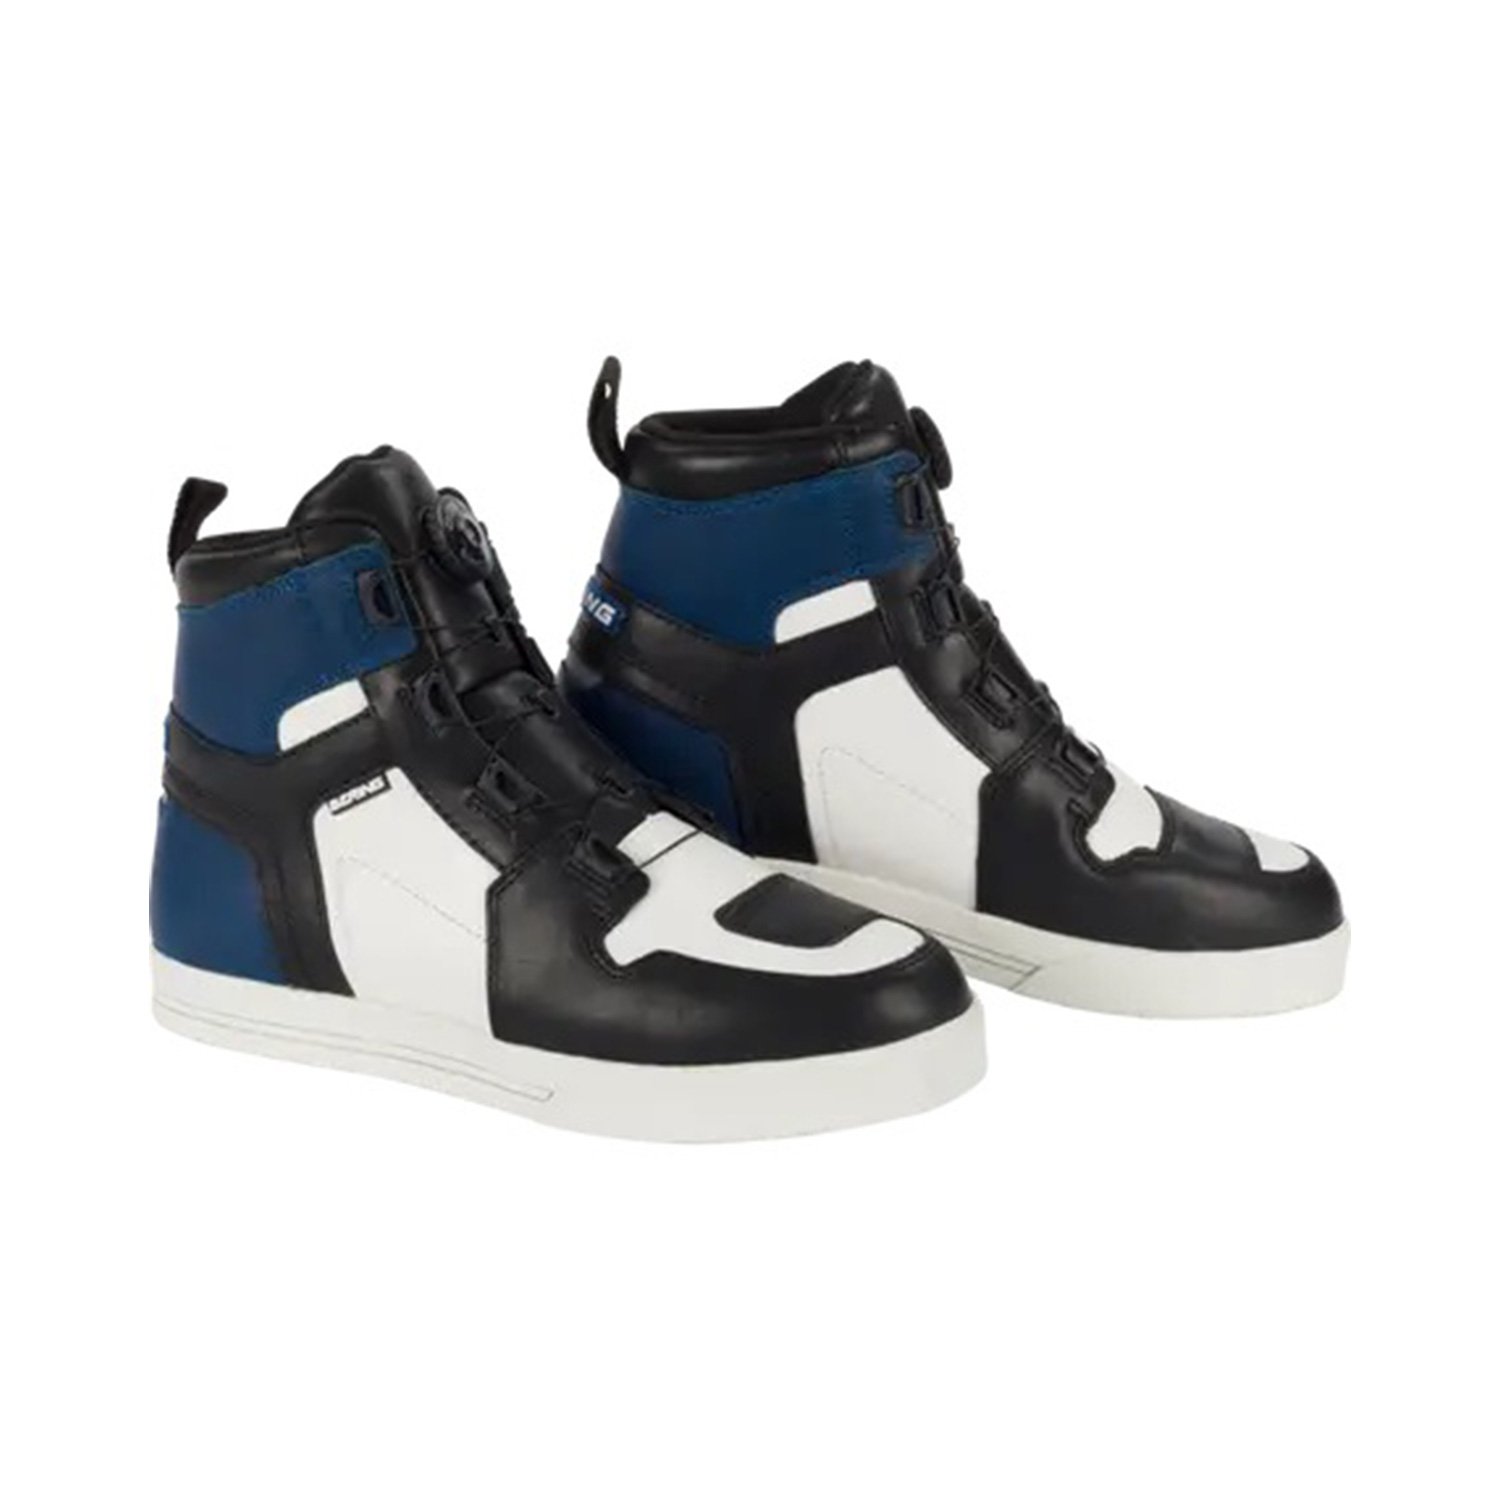 Image of Bering Sneakers Reflex A-Top Black White Blue Size 40 EN